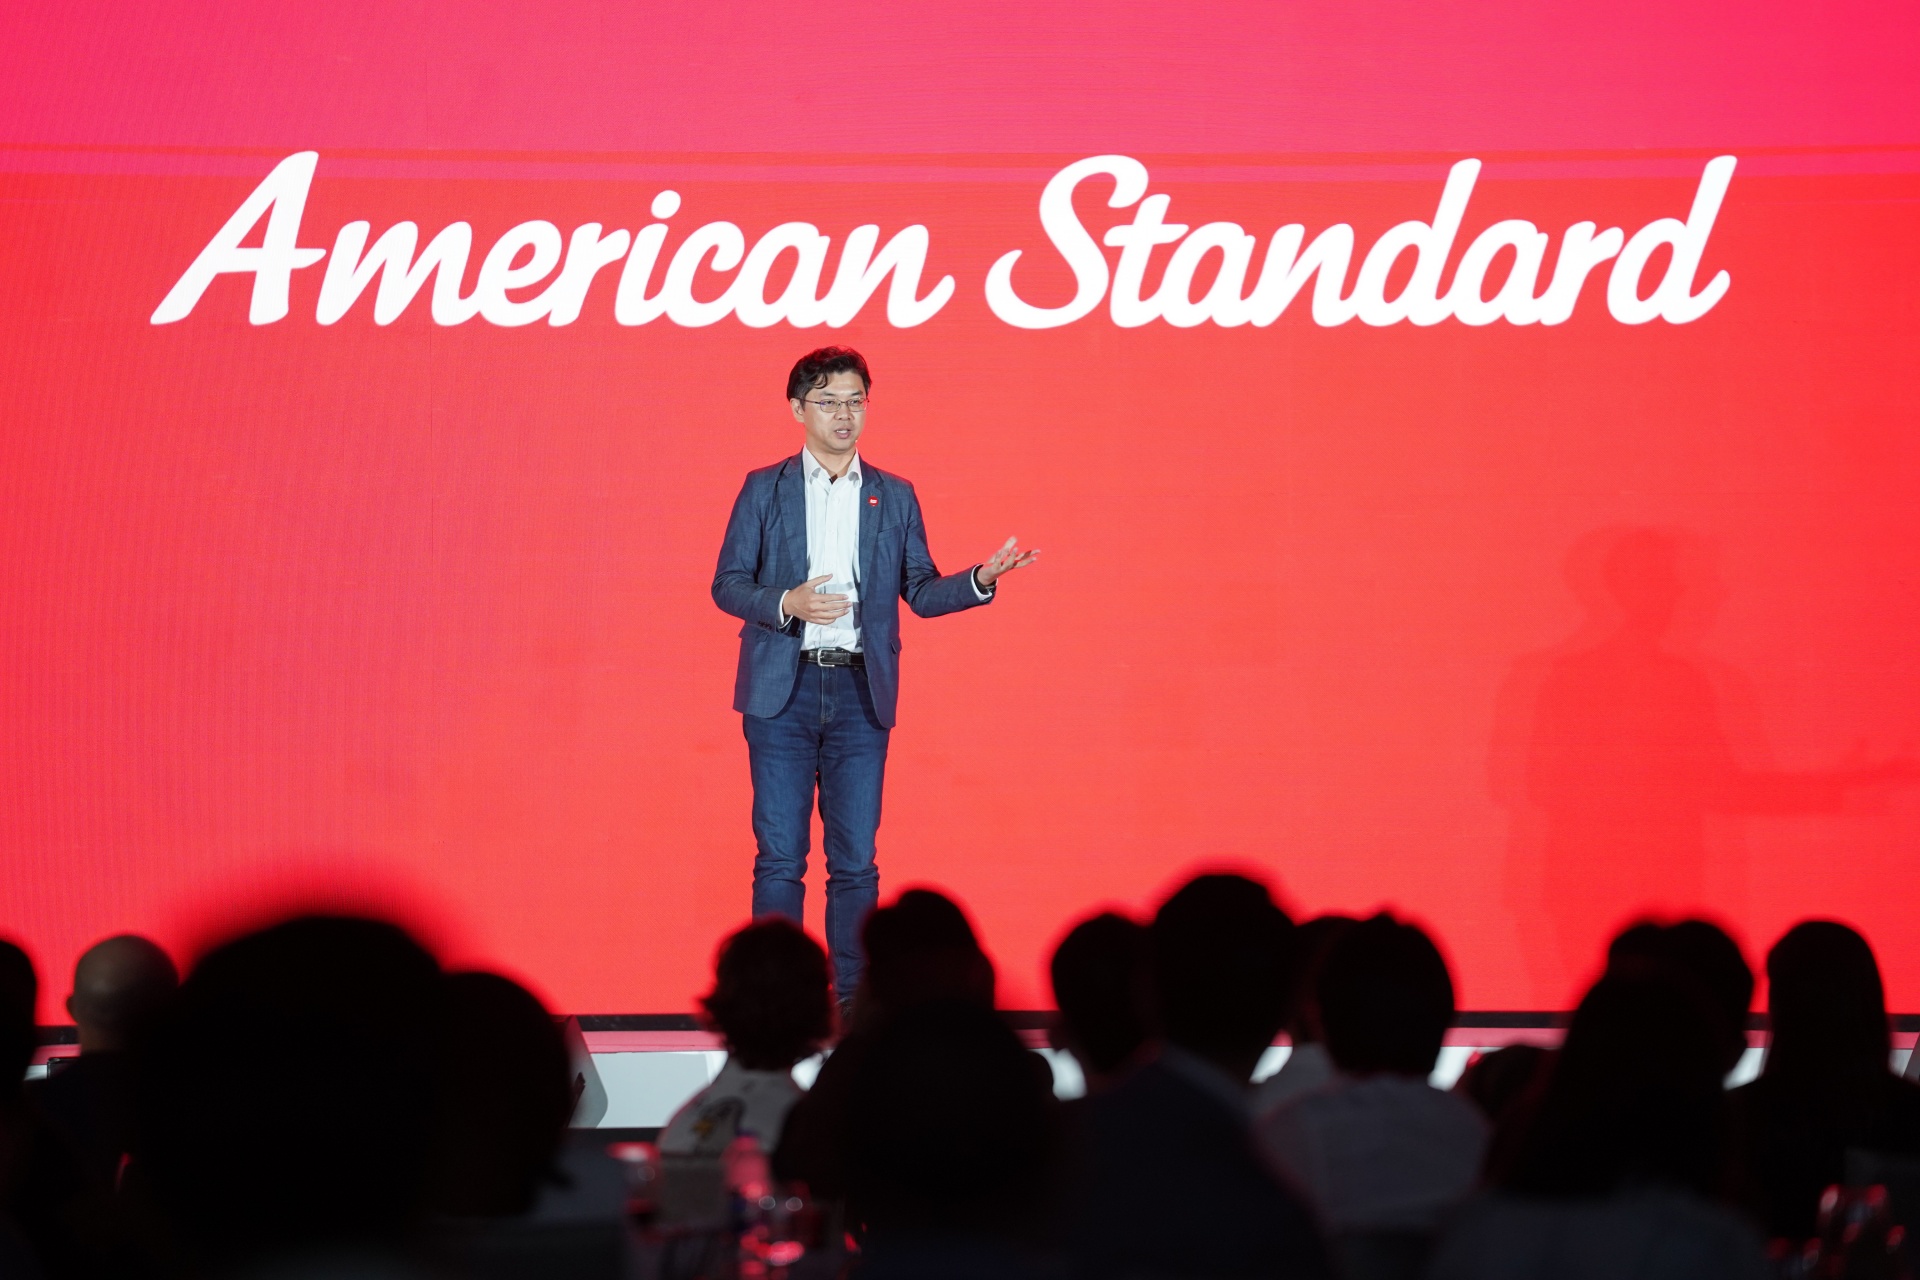 American Standard unveils new brand identity